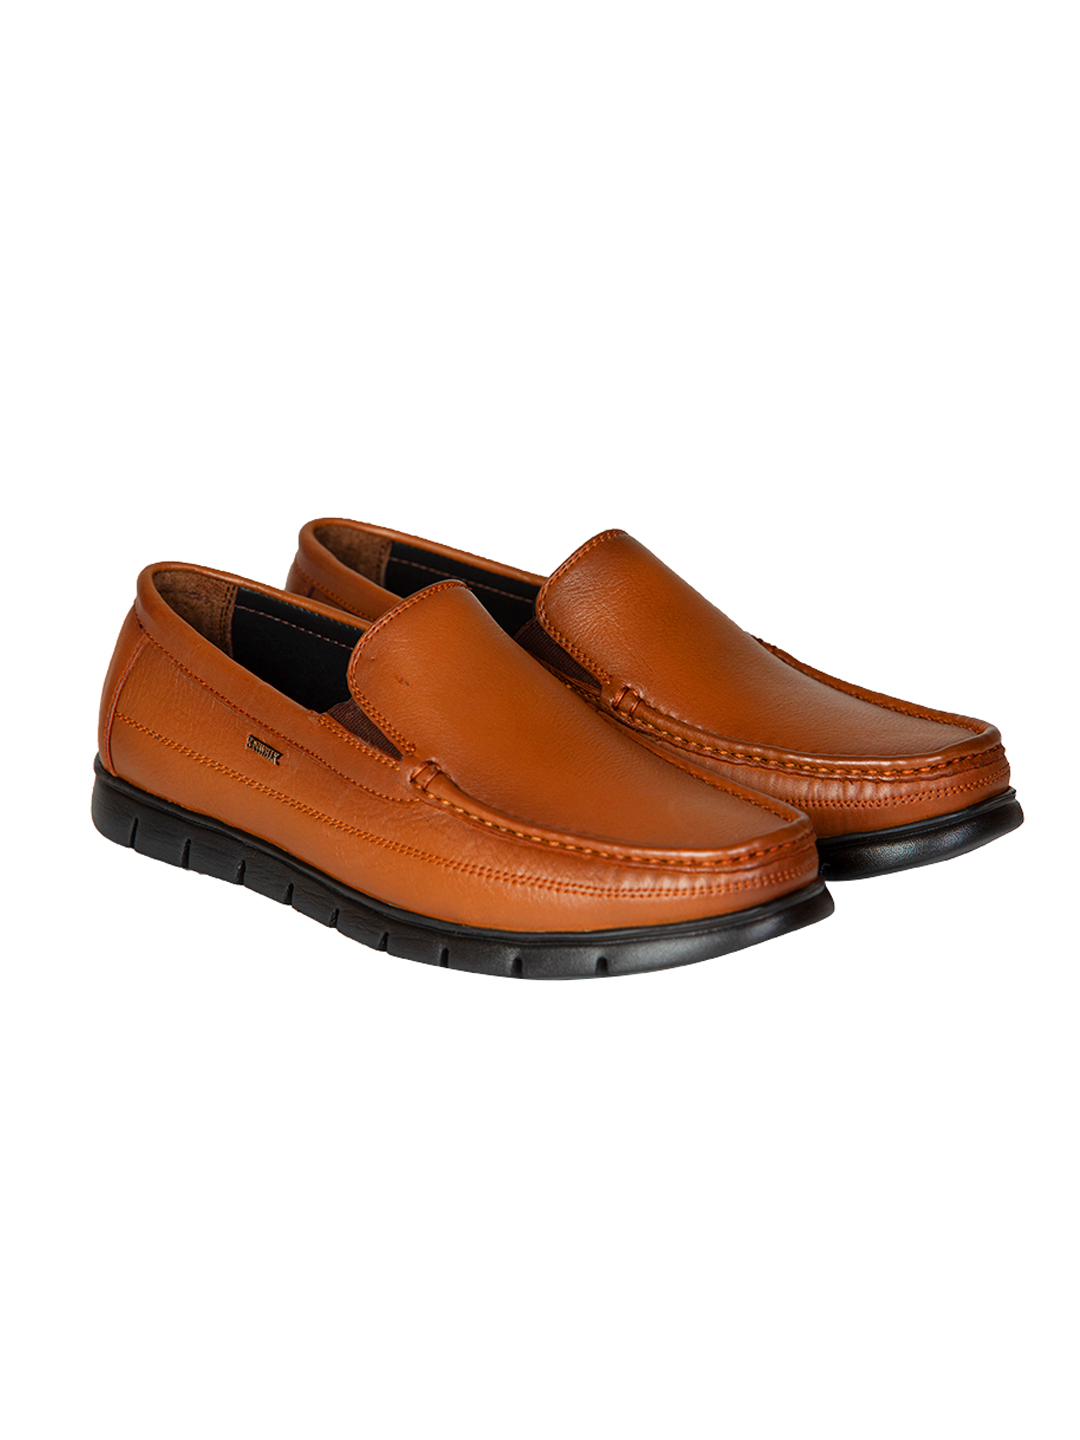 Buy Von Wellx Germany Comfort Tan Zion Shoes Online in Kolkata